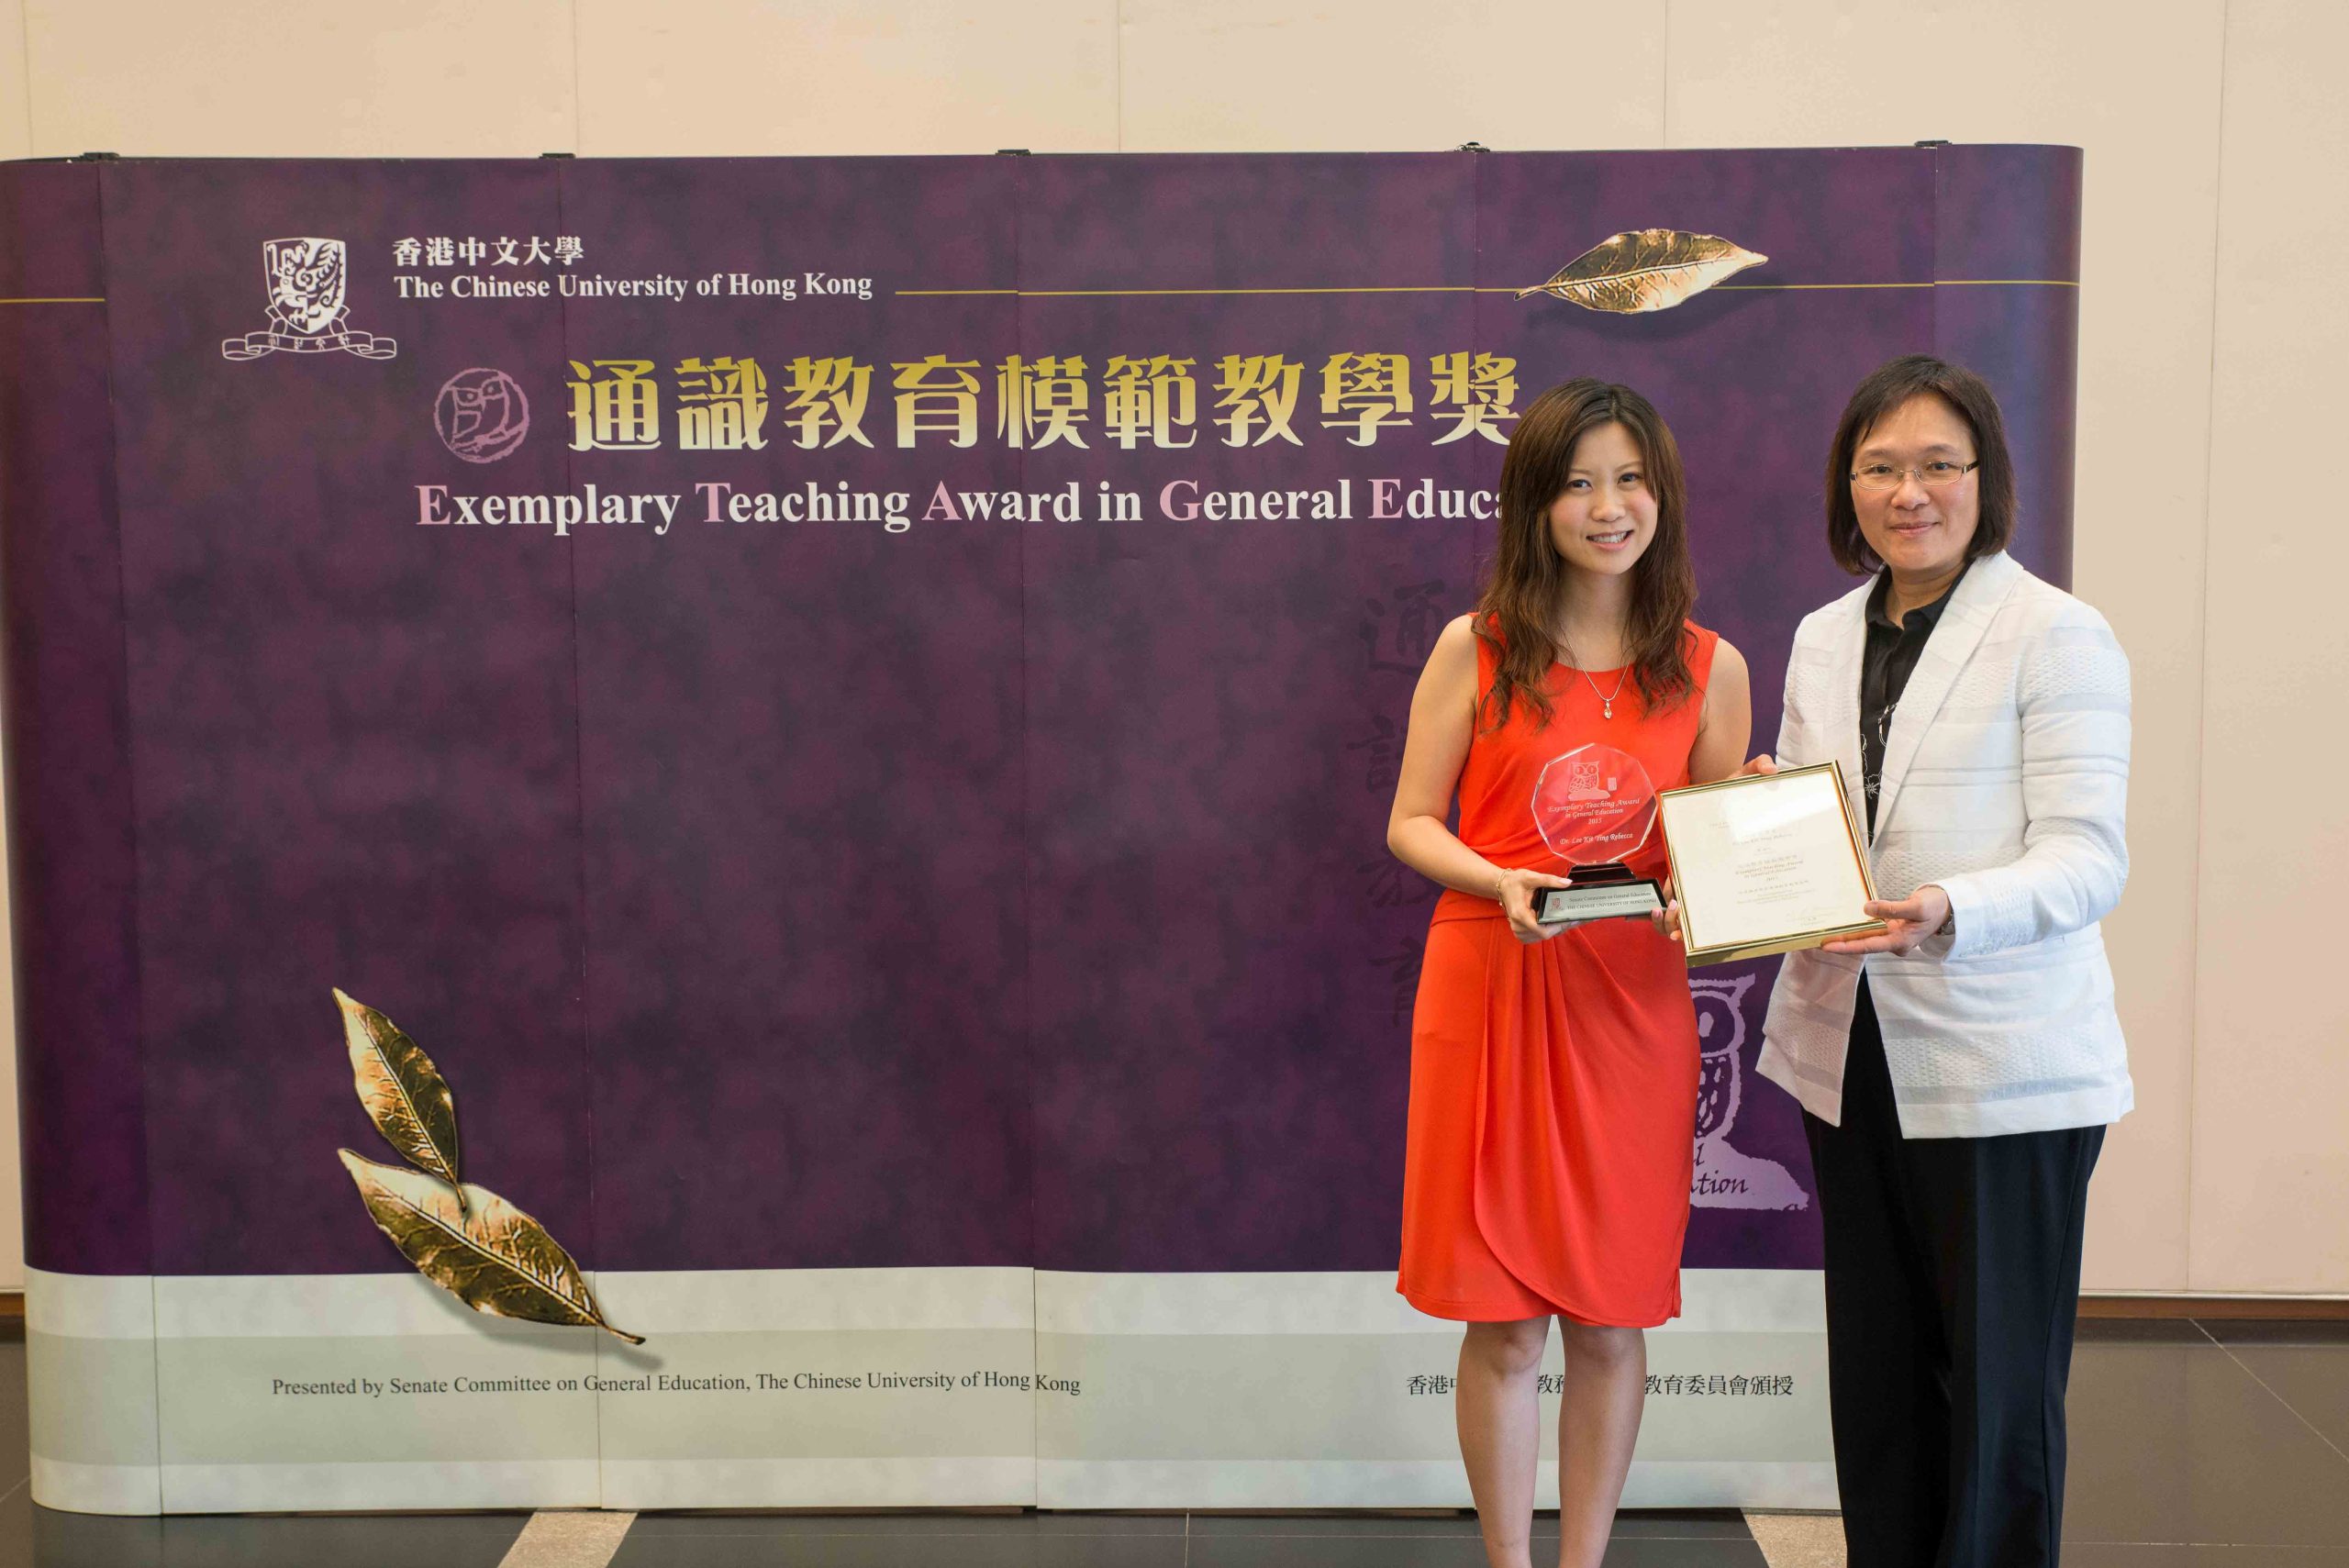 Presentation of award to Dr. Lee Kit Ying Rebecca